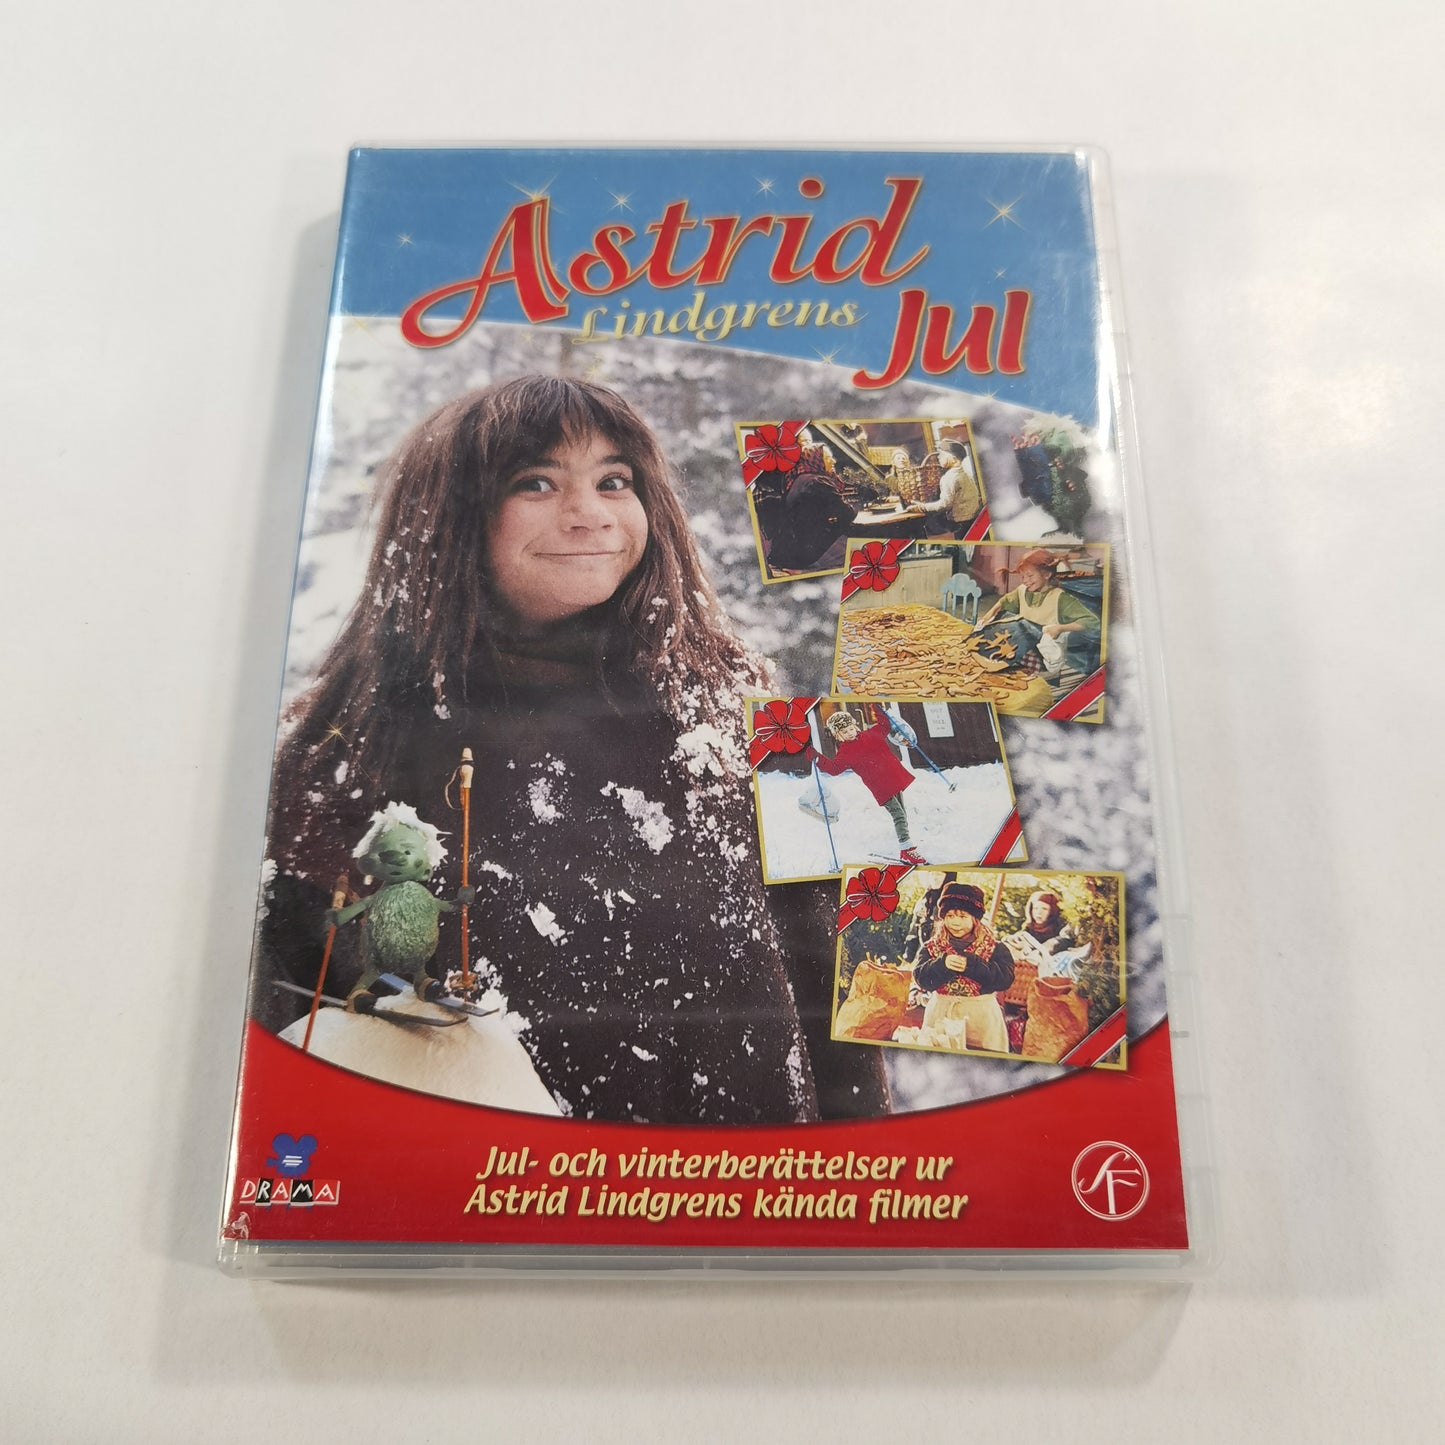 Astrid Lindgrens Jul (1999) - DVD SE